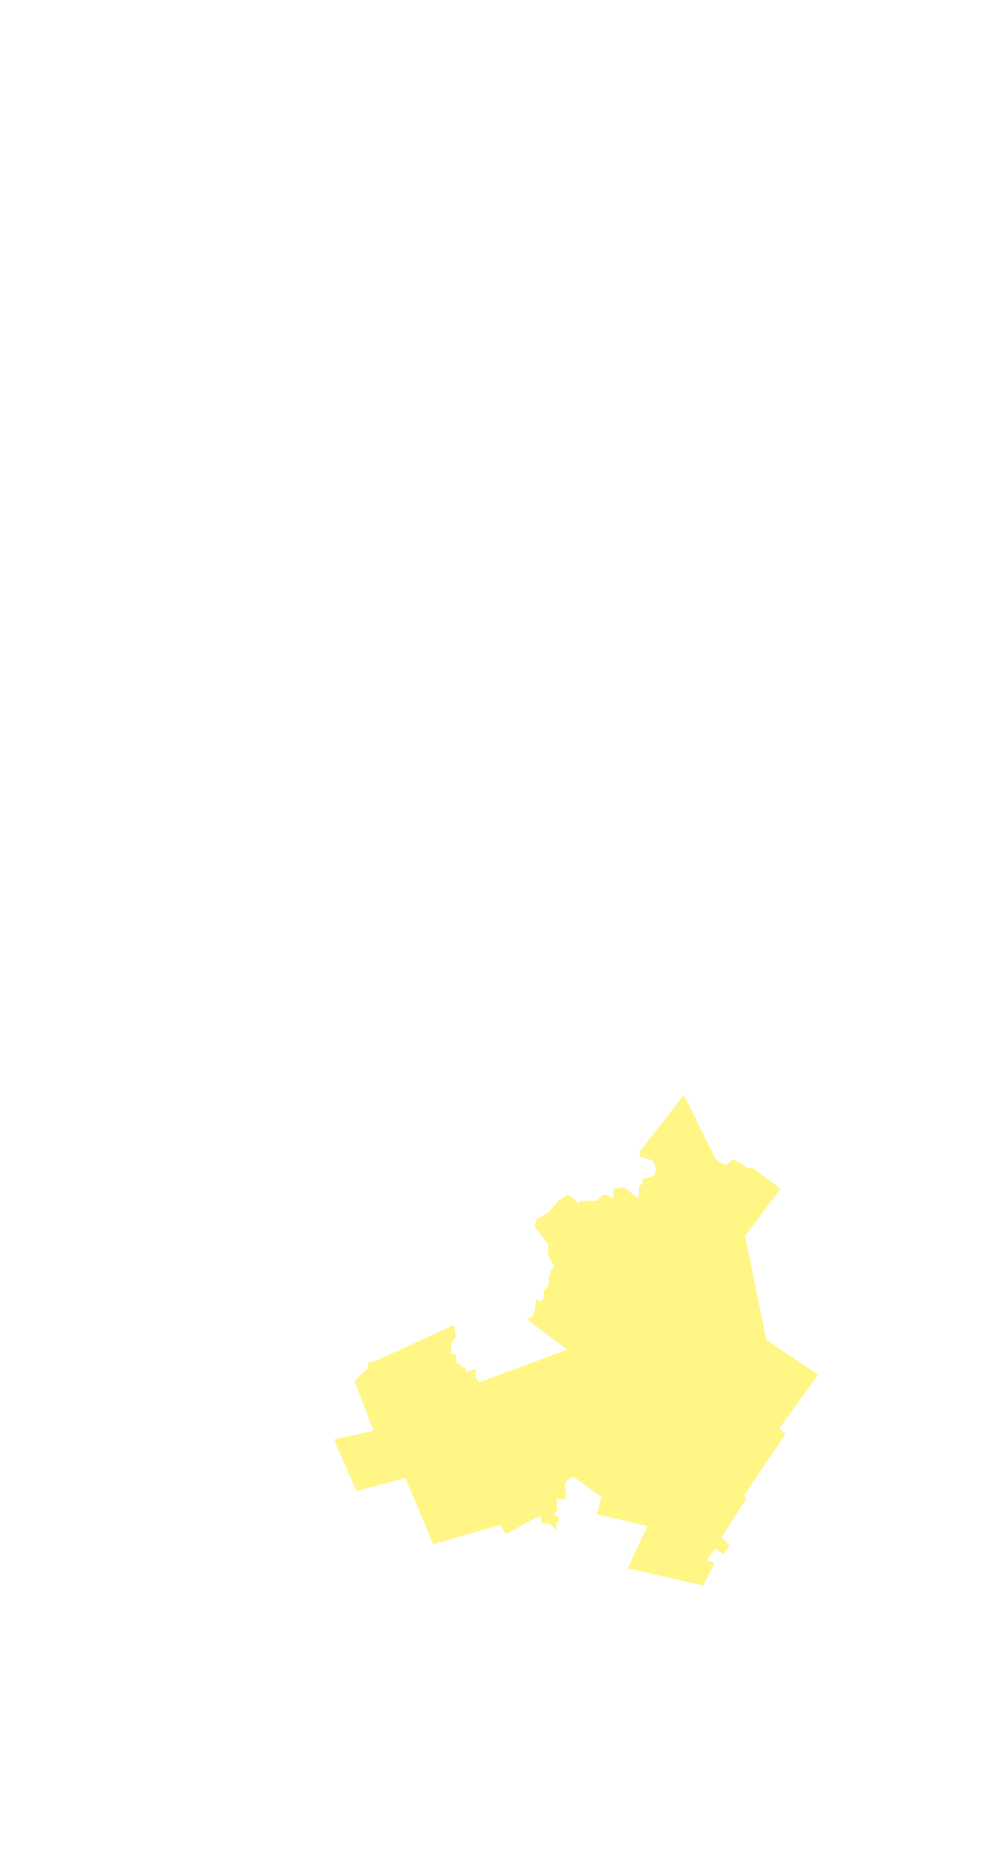 New Hampshire Distributors Territory Map